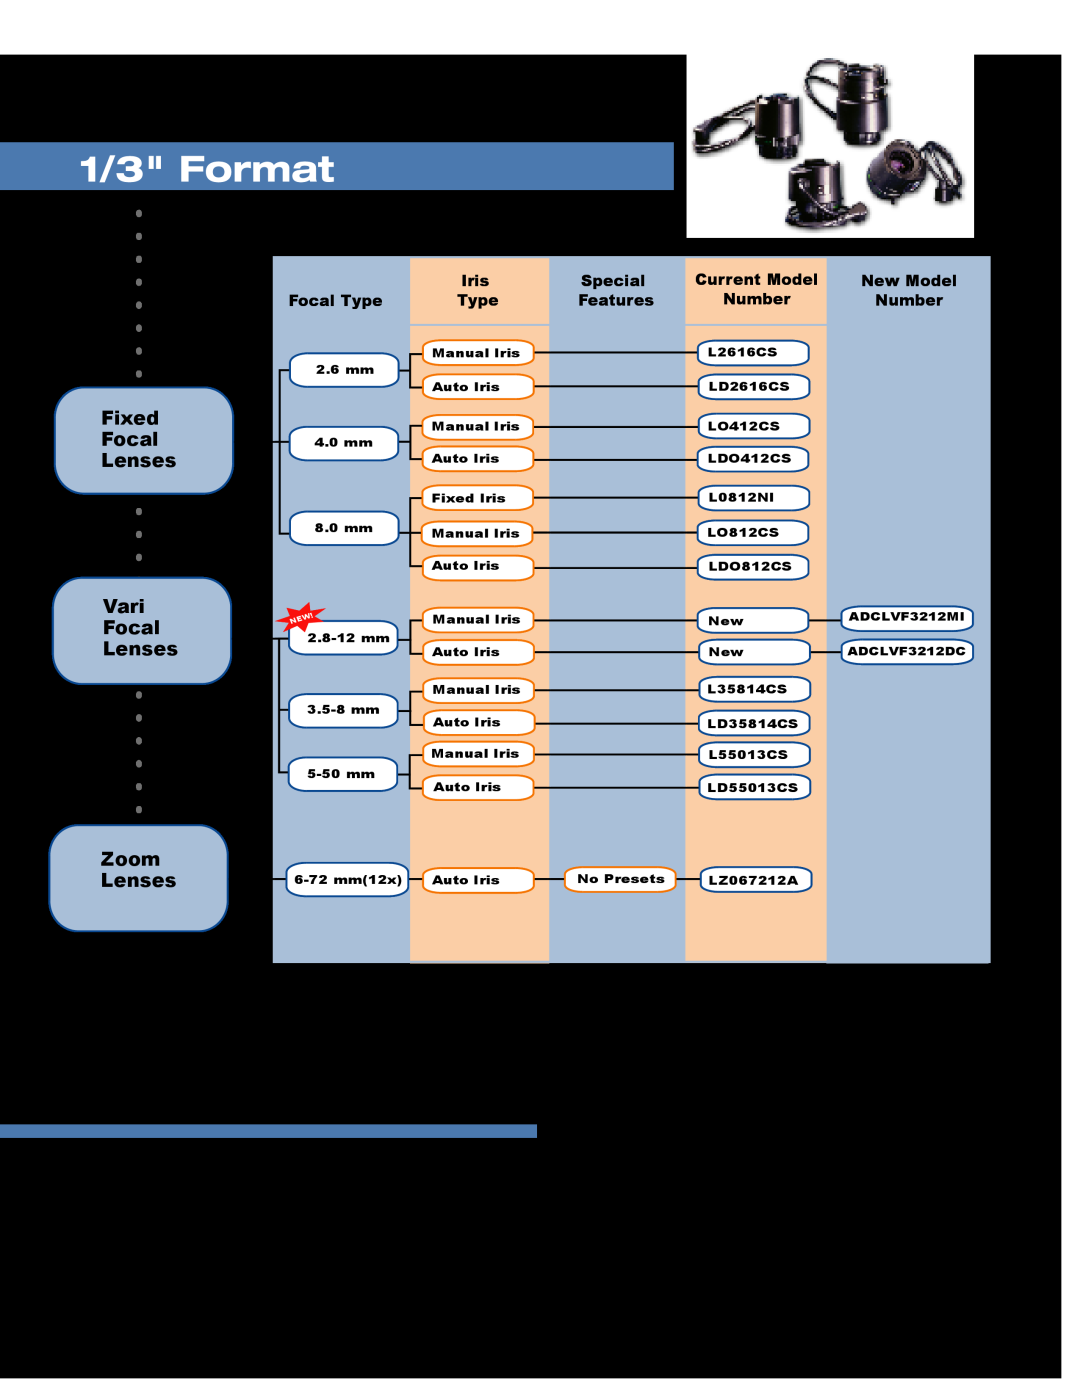 American Dynamics LDO614CS, LD3616CS 1/3 Format, ADCLVF 3 212DC, Lens Selection Guide, Model Number Configuration Chart 